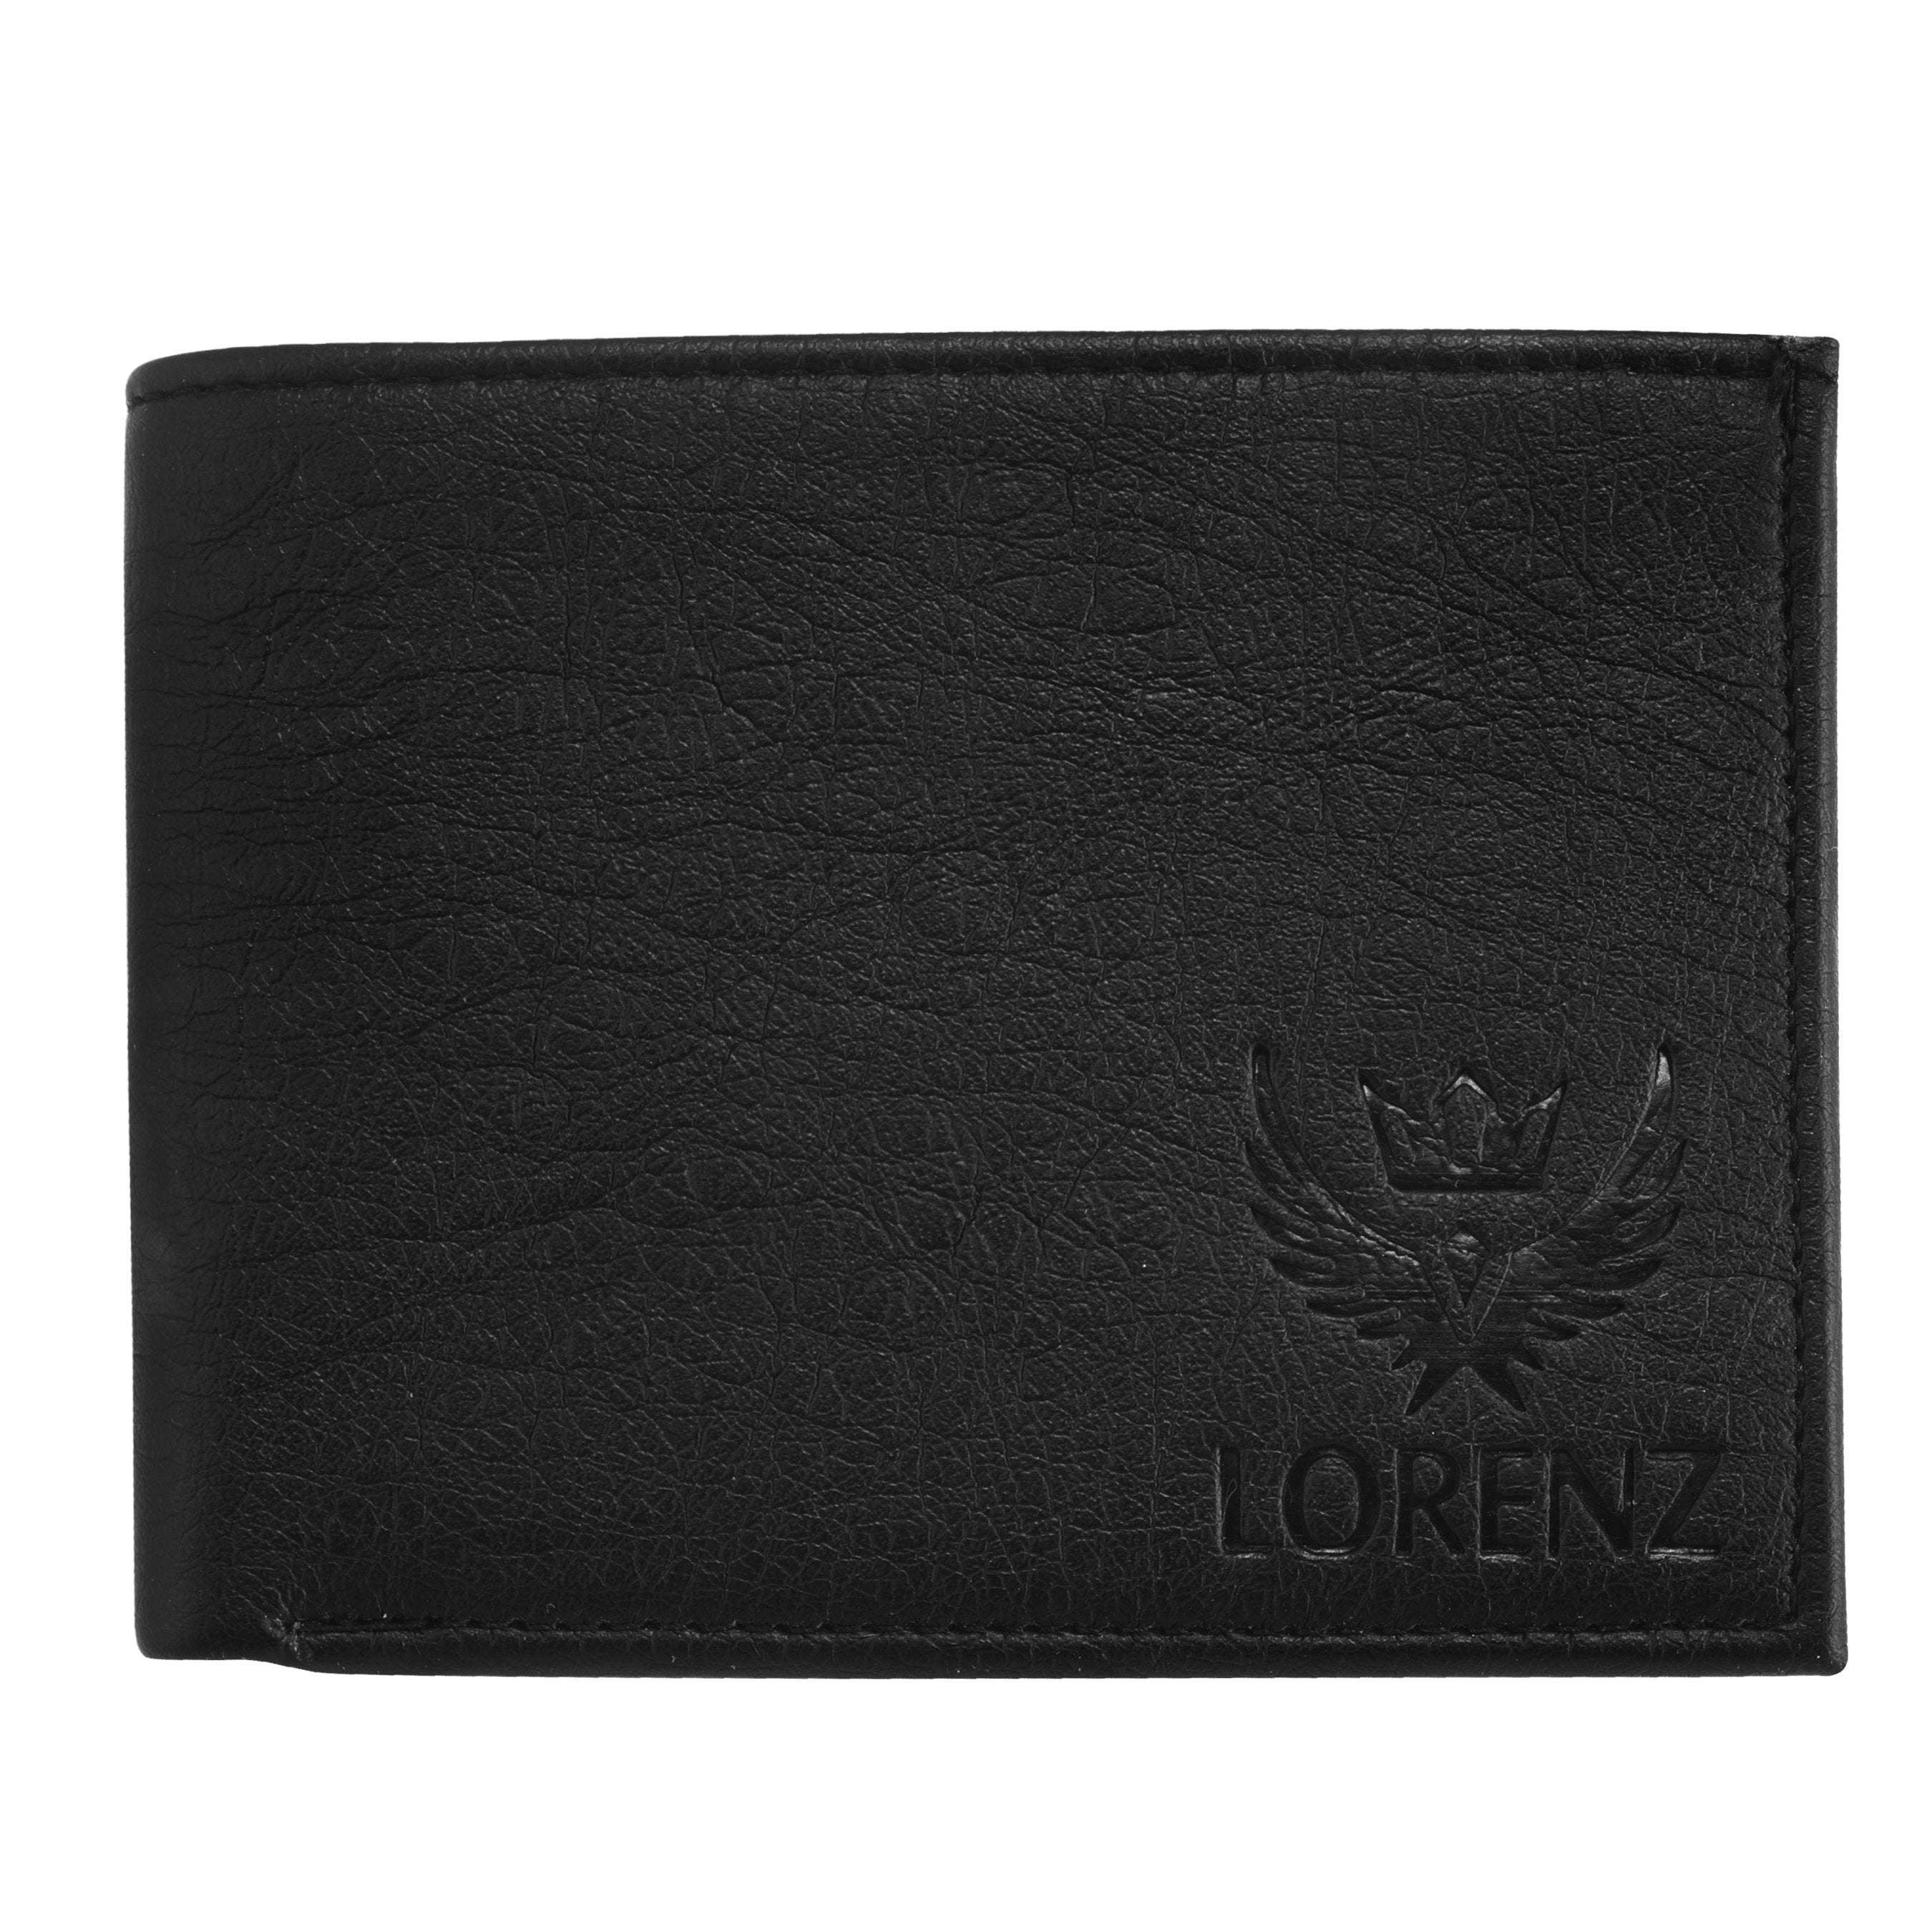 Lorenz Combo of Black Wallet, Watch and Black Sunglasses for Men- CM-103SN-WL-BLK - Lorenz Fashion